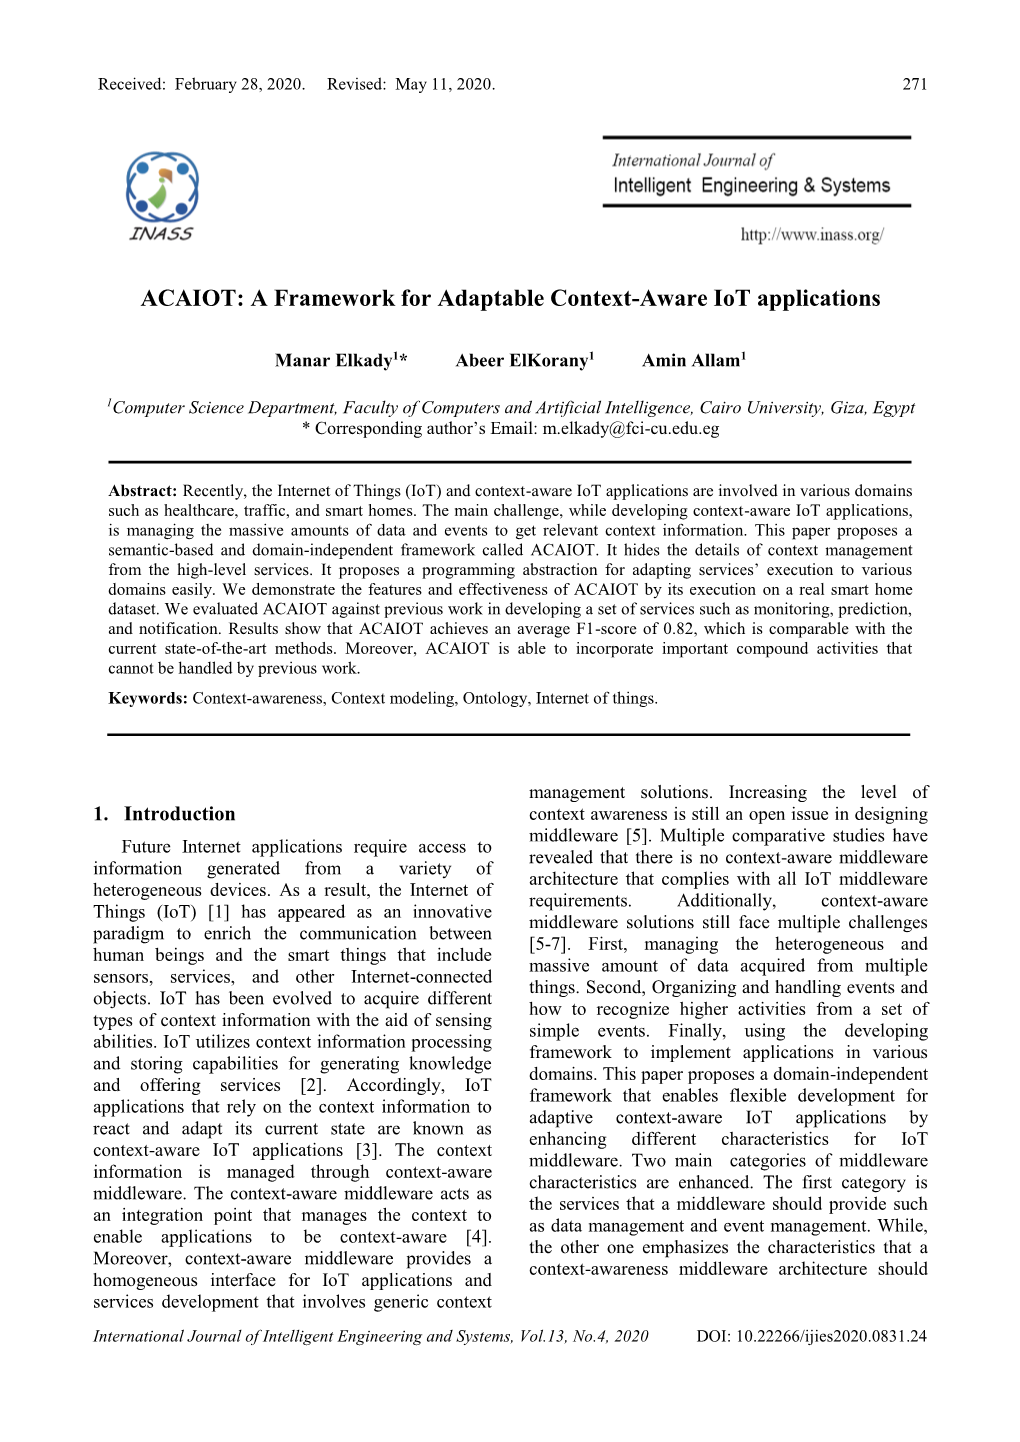 ACAIOT: a Framework for Adaptable Context-Aware Iot Applications